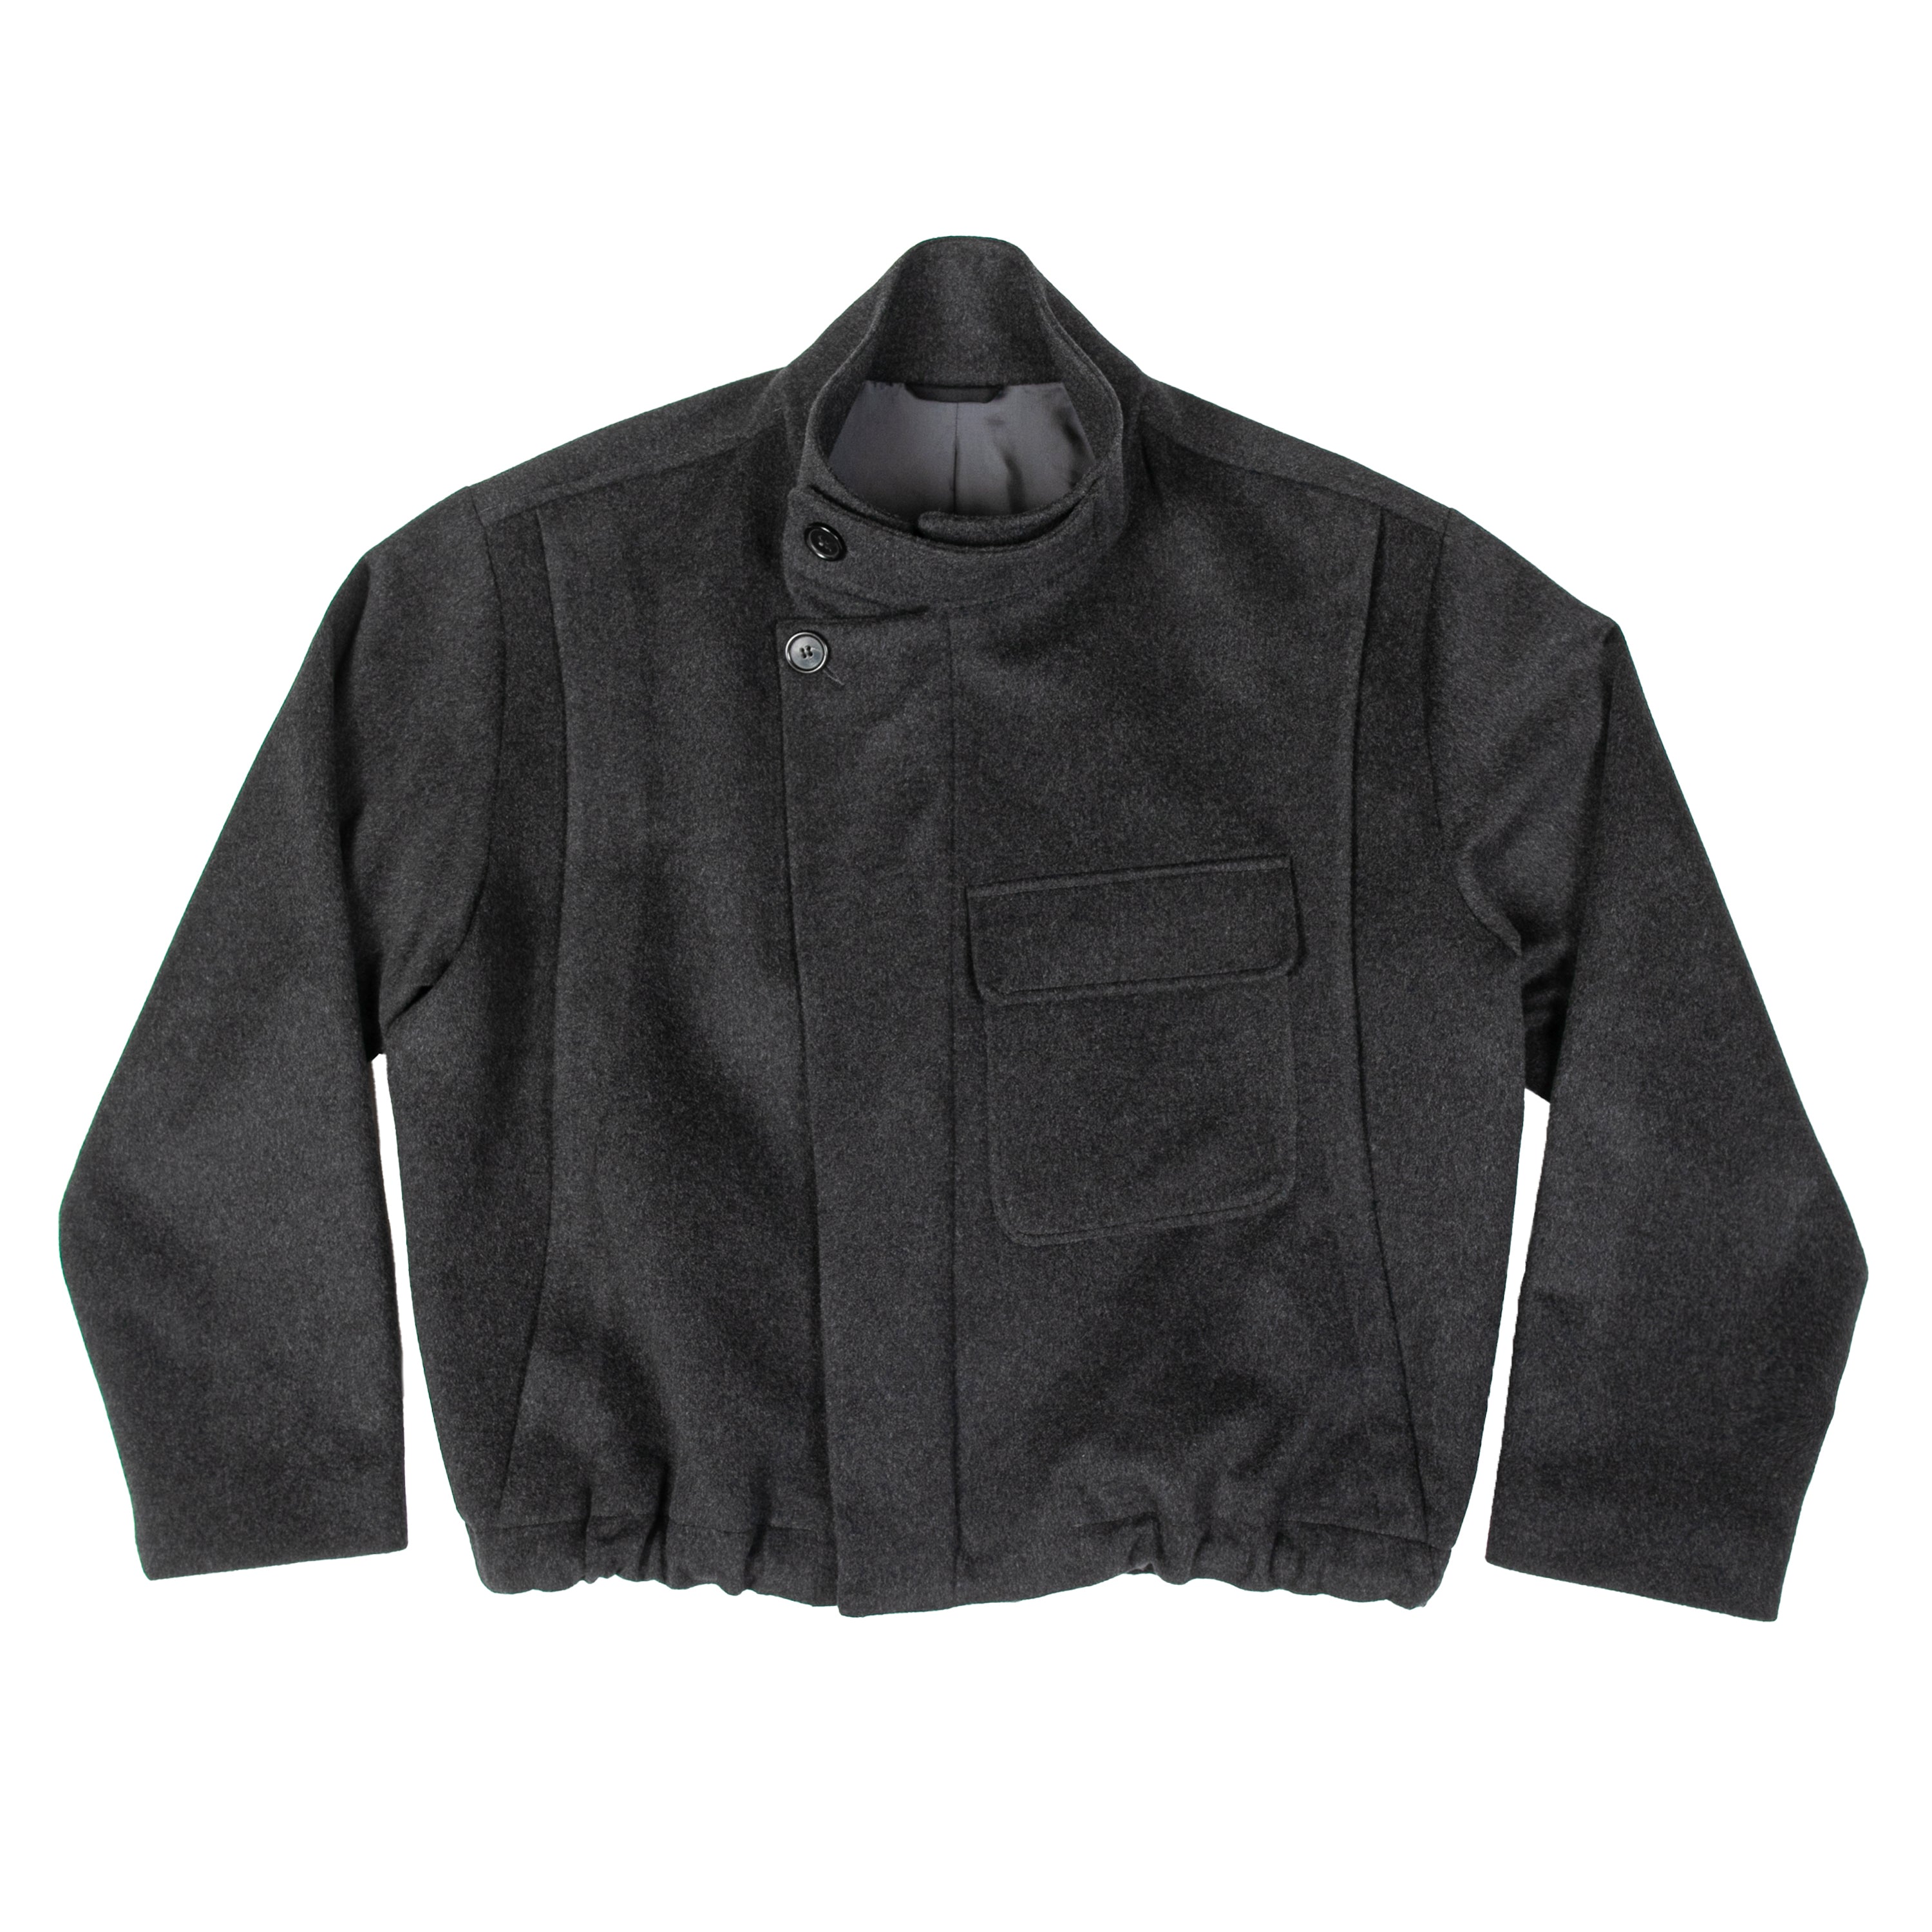 Dispatch Jacket Cashmere Wool Grey - PREORDER